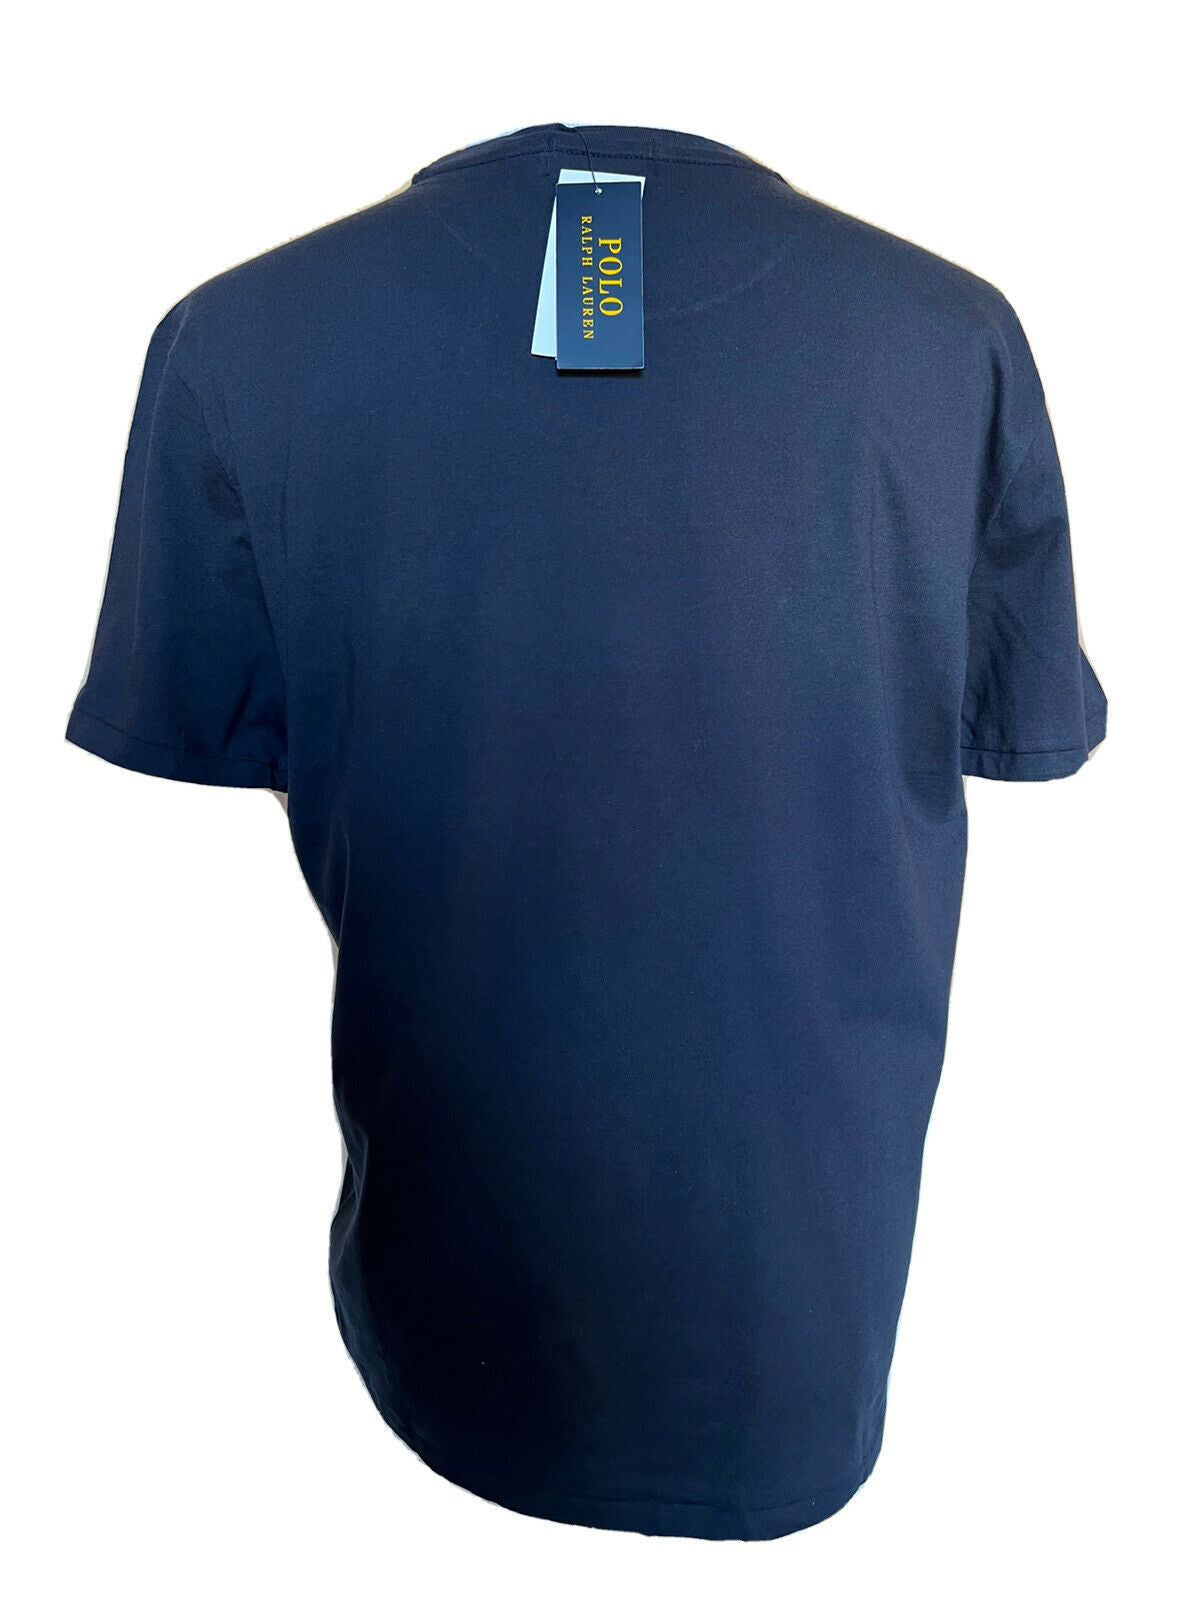 NWT 59.50 Polo Ralph Lauren Bear T-Shirt Blue Large